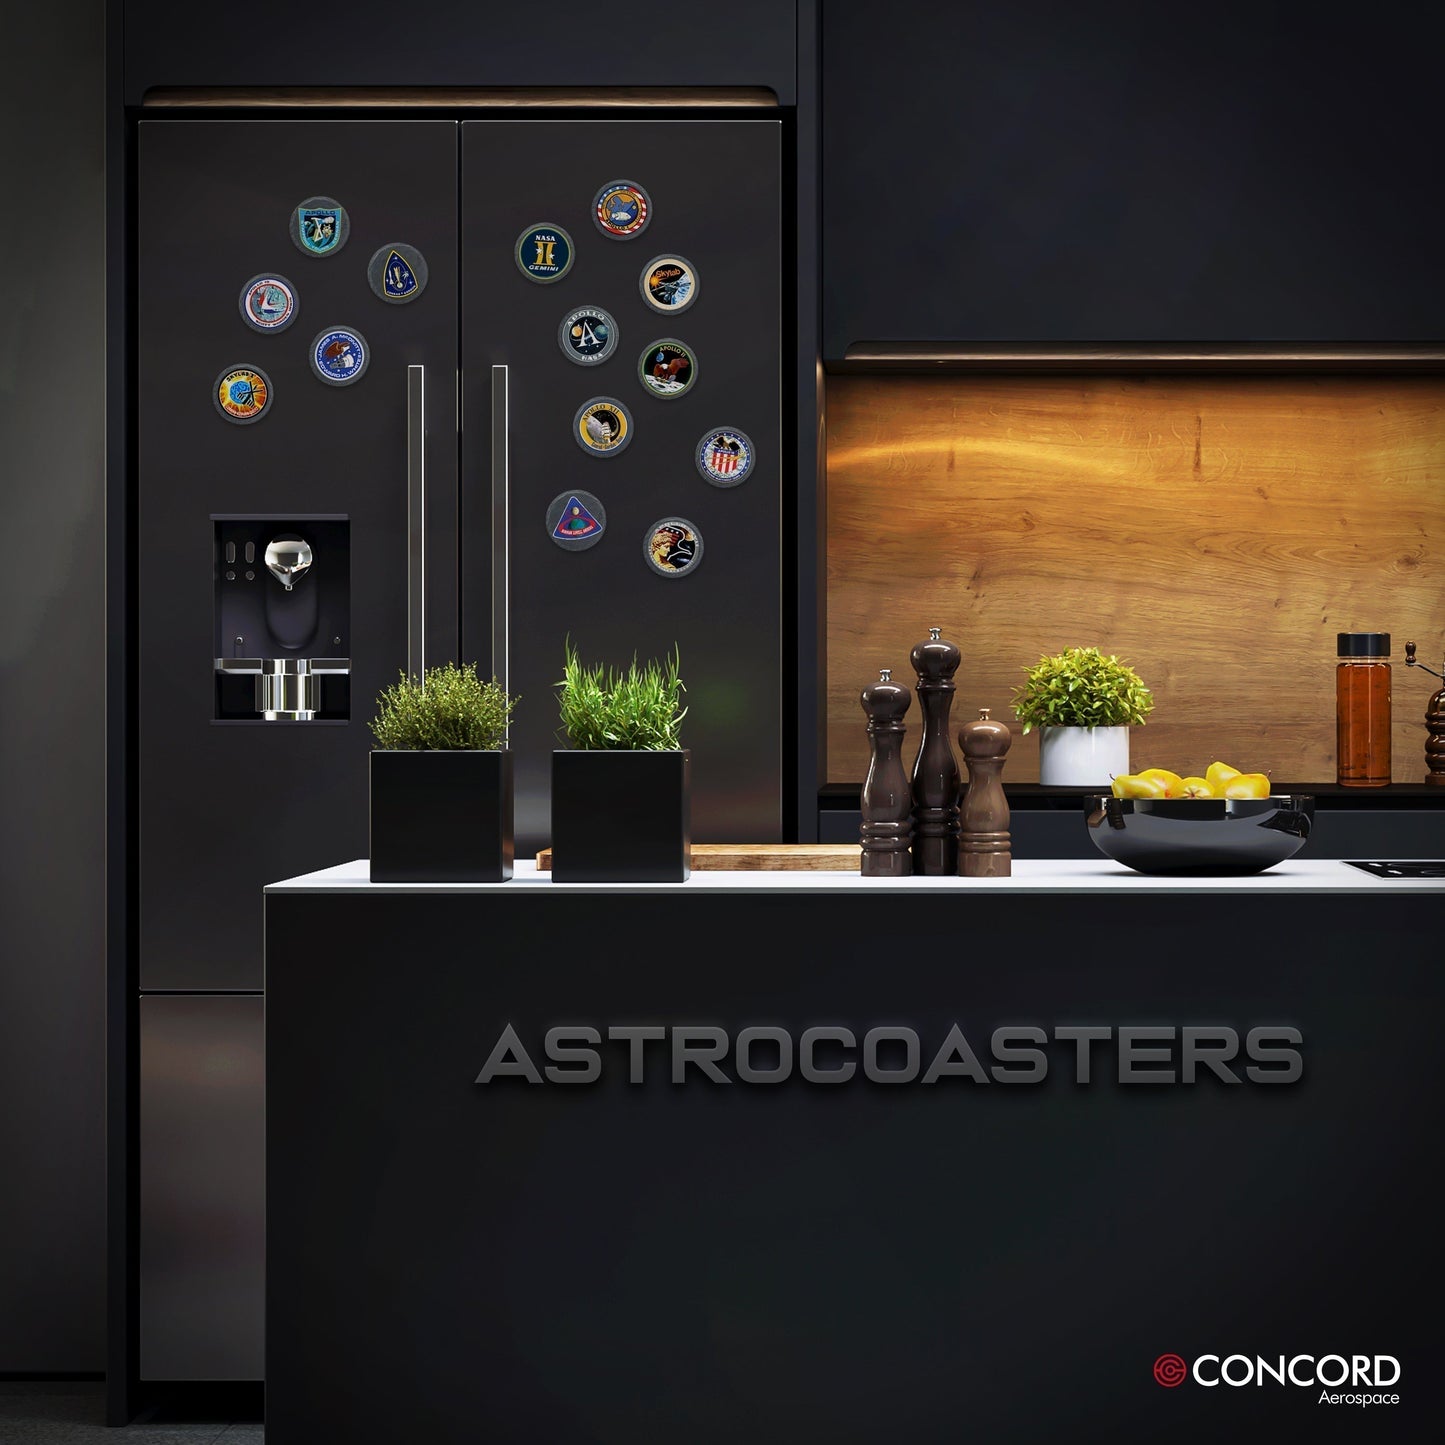 JELLY DONUT "ASTROFANIYOT" - SLATE COASTER - Concord Aerospace Concord Aerospace Concord Aerospace Coasters